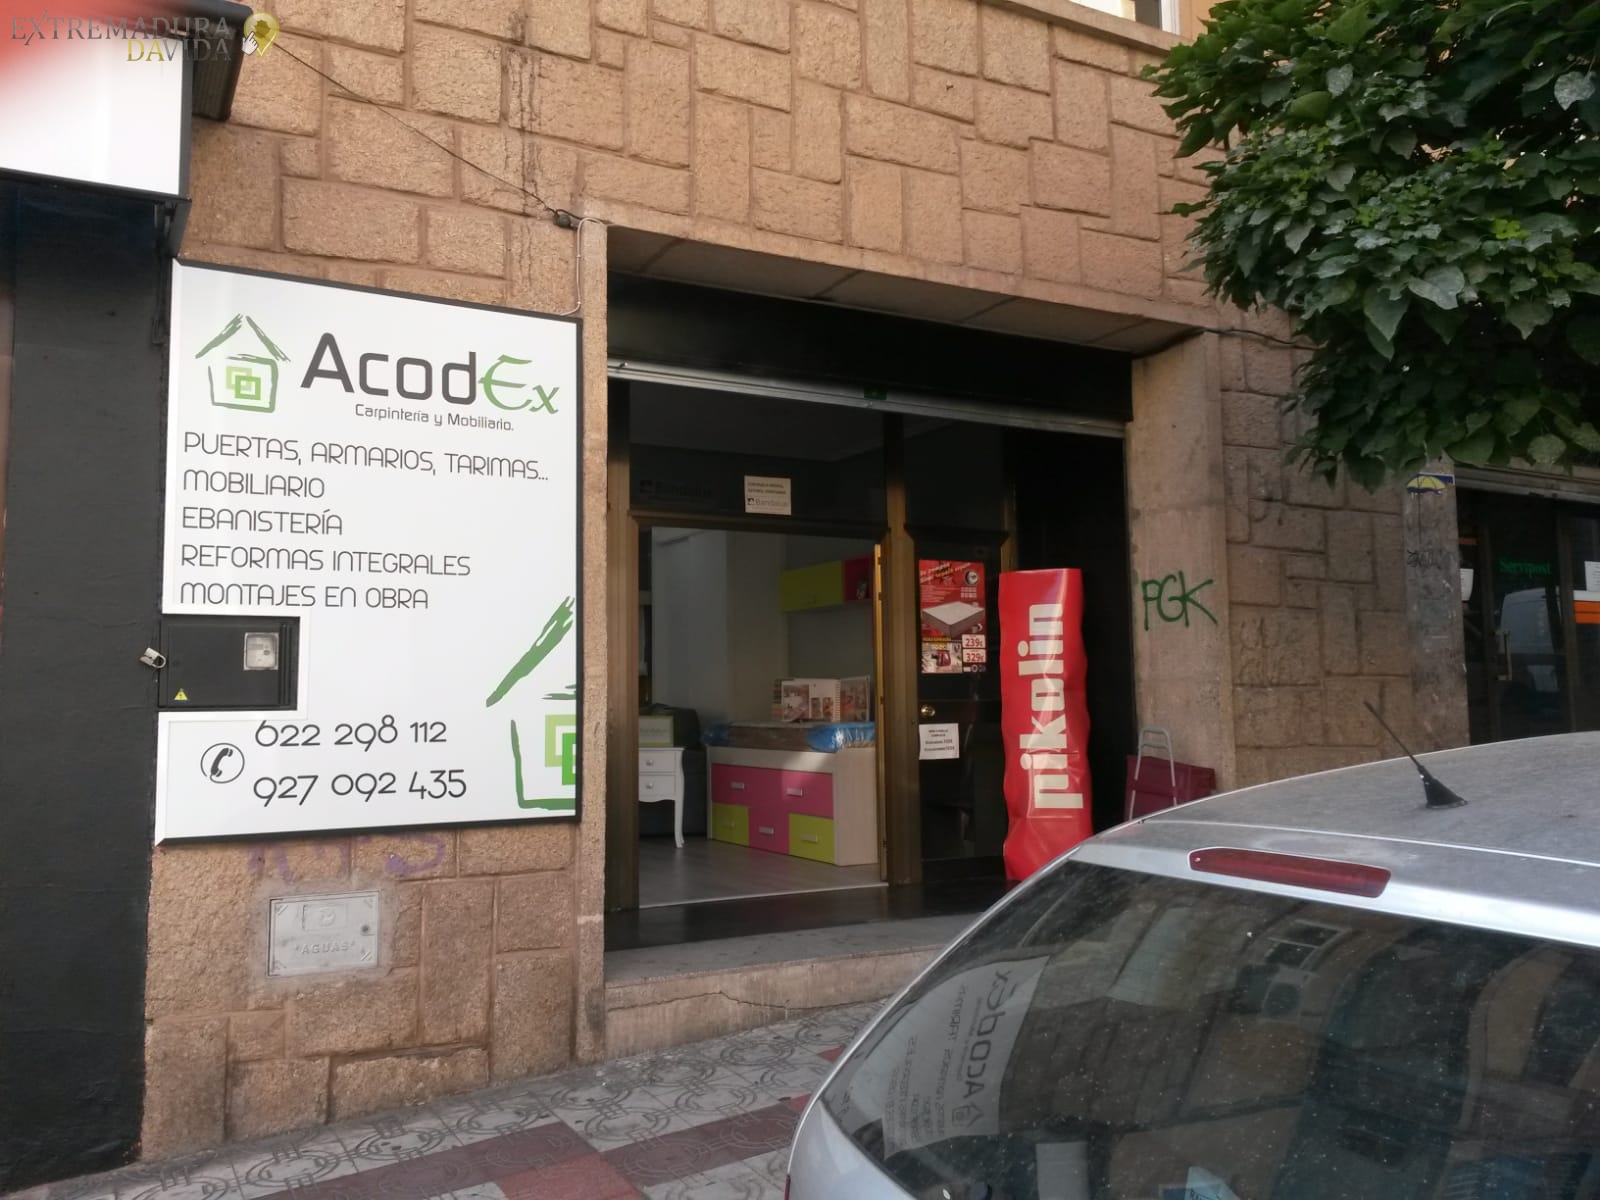 Tienda de Hogar en Cáceres Acodex 